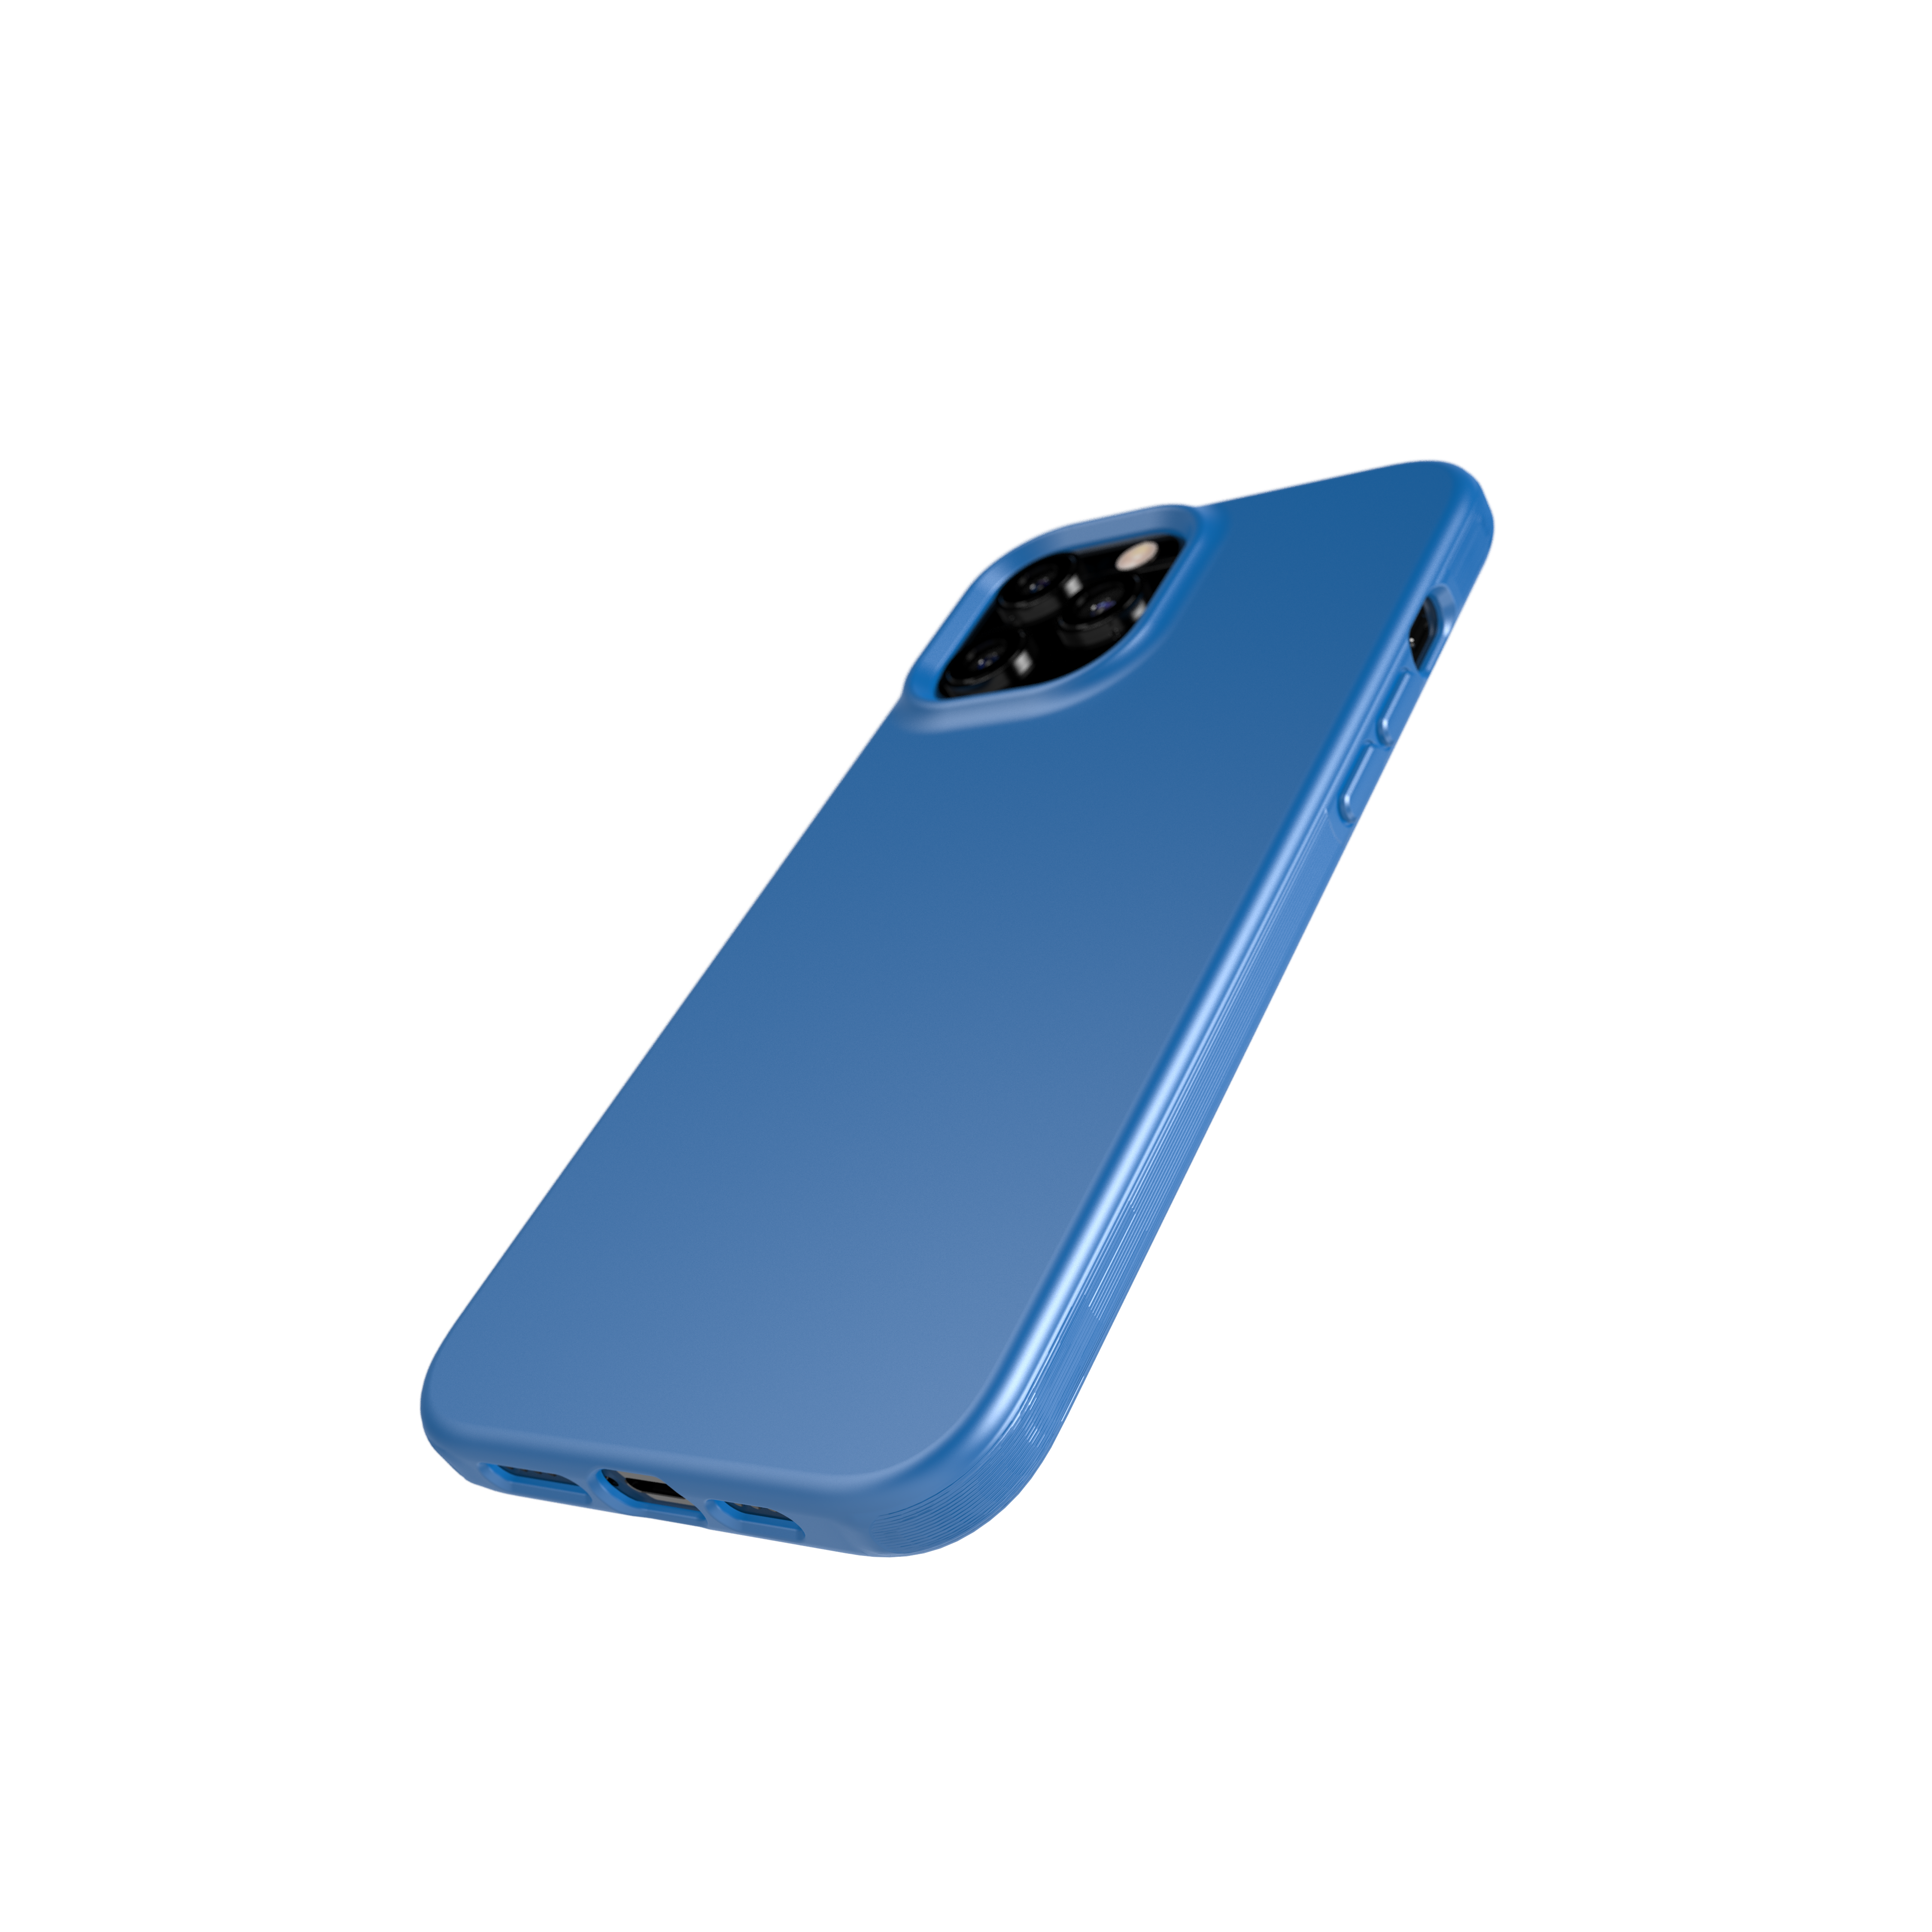 Evo Slim Case iPhone 12 Pro Max Classic Blue